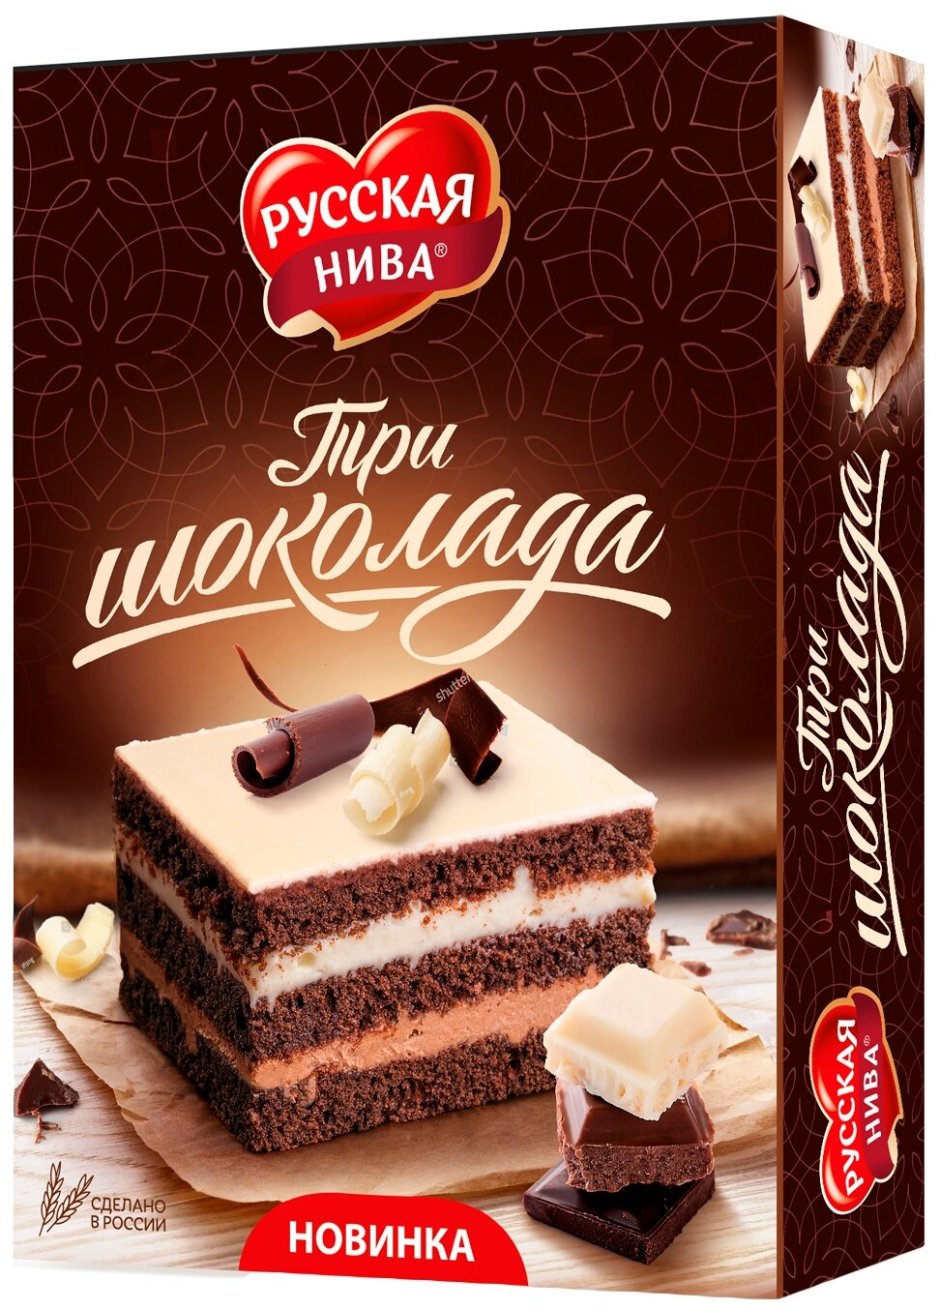 Торт "три шоколада" 400гр (русская Нива)